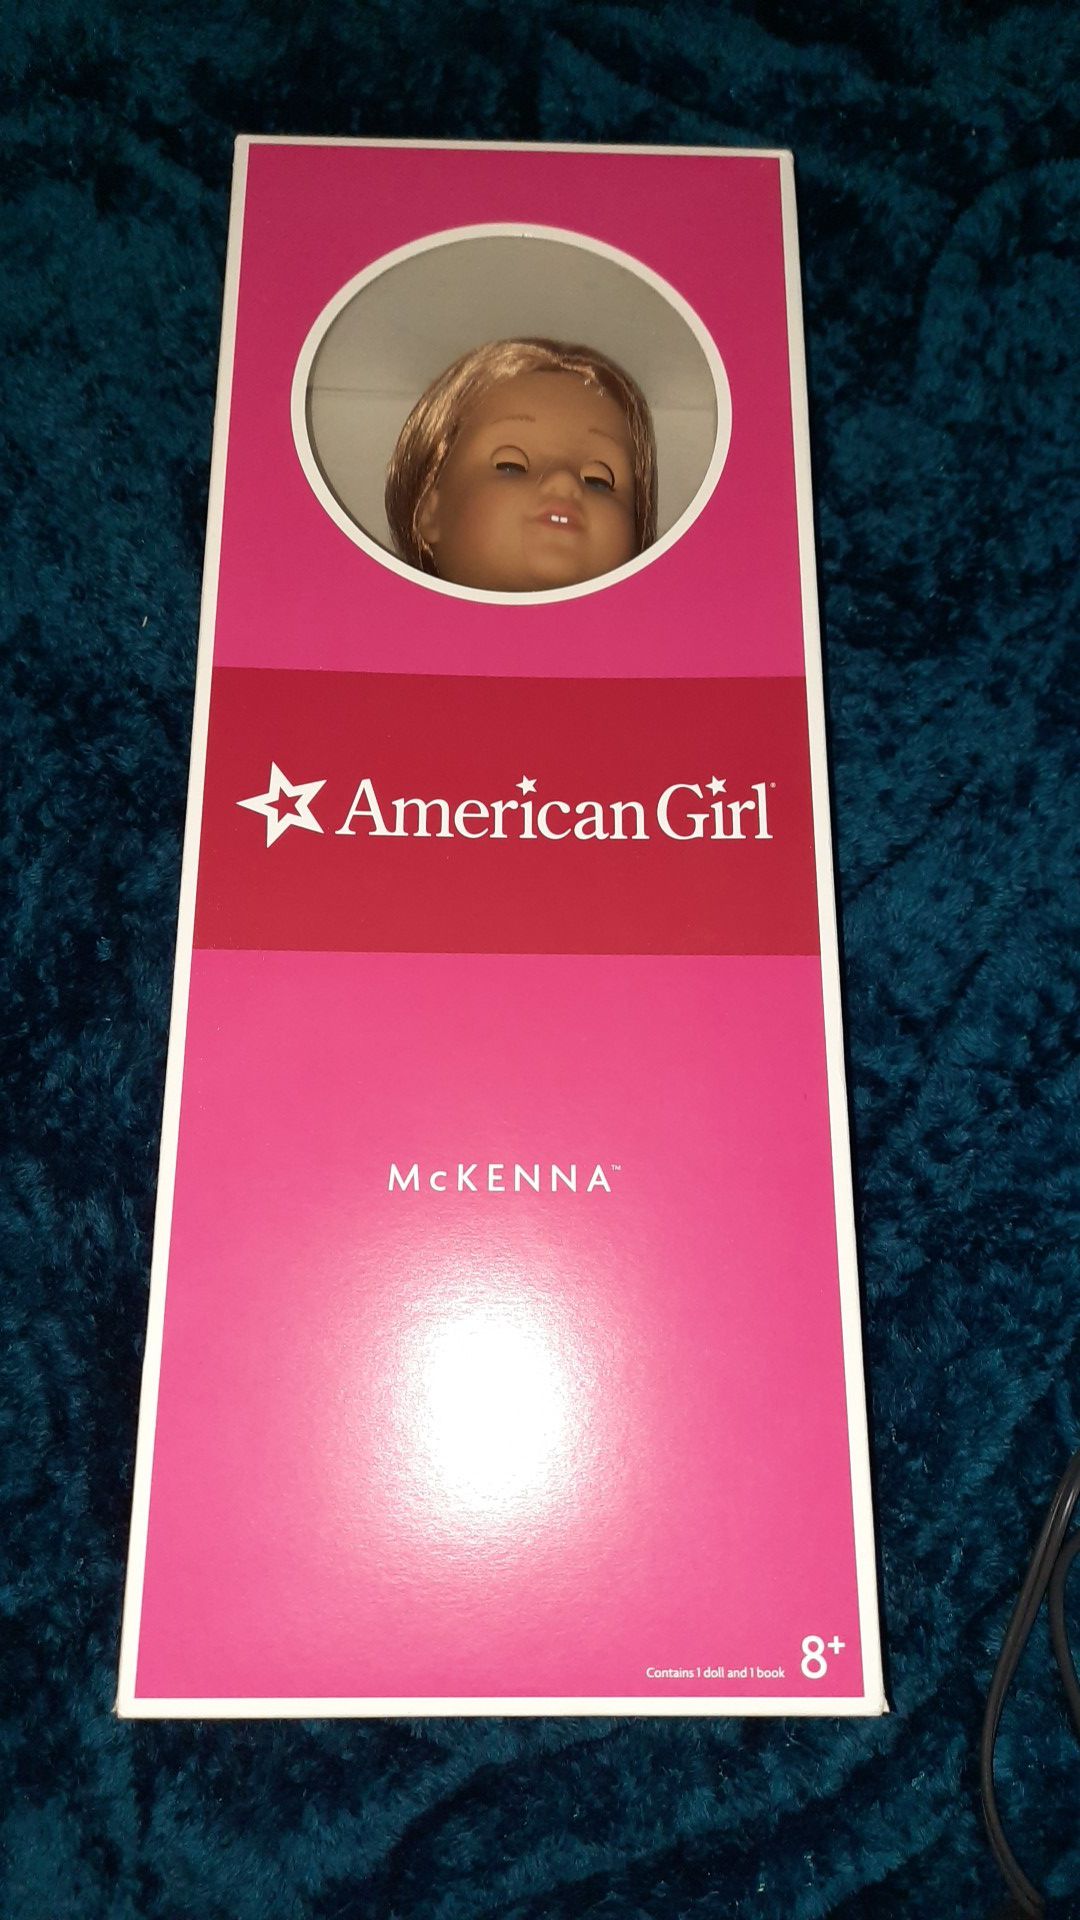 American girl doll, McKenna